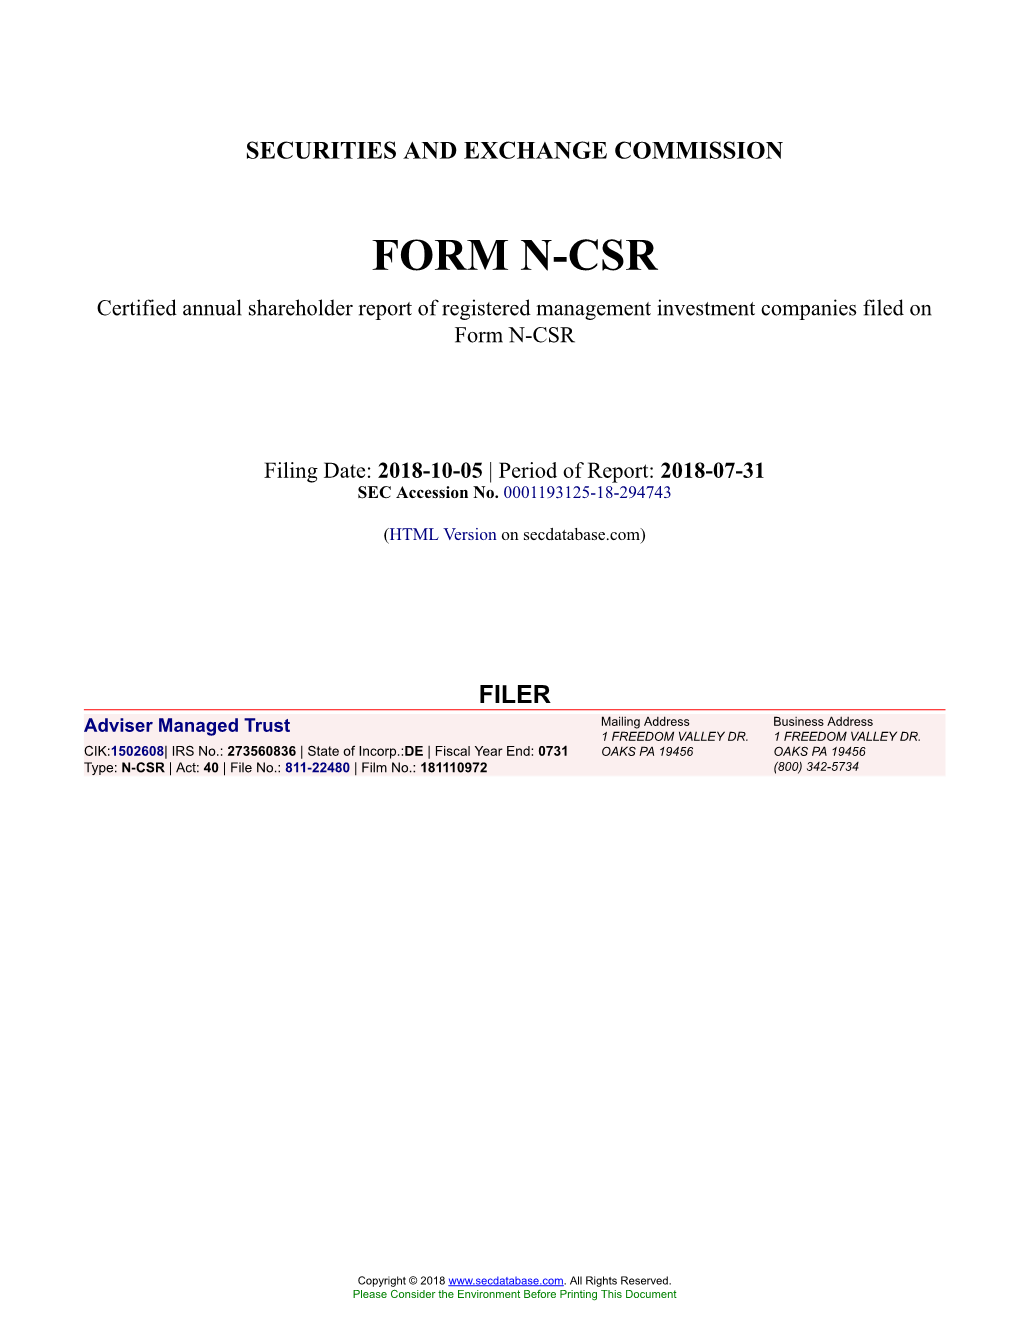 Adviser Managed Trust Form N-CSR Filed 2018-10-05